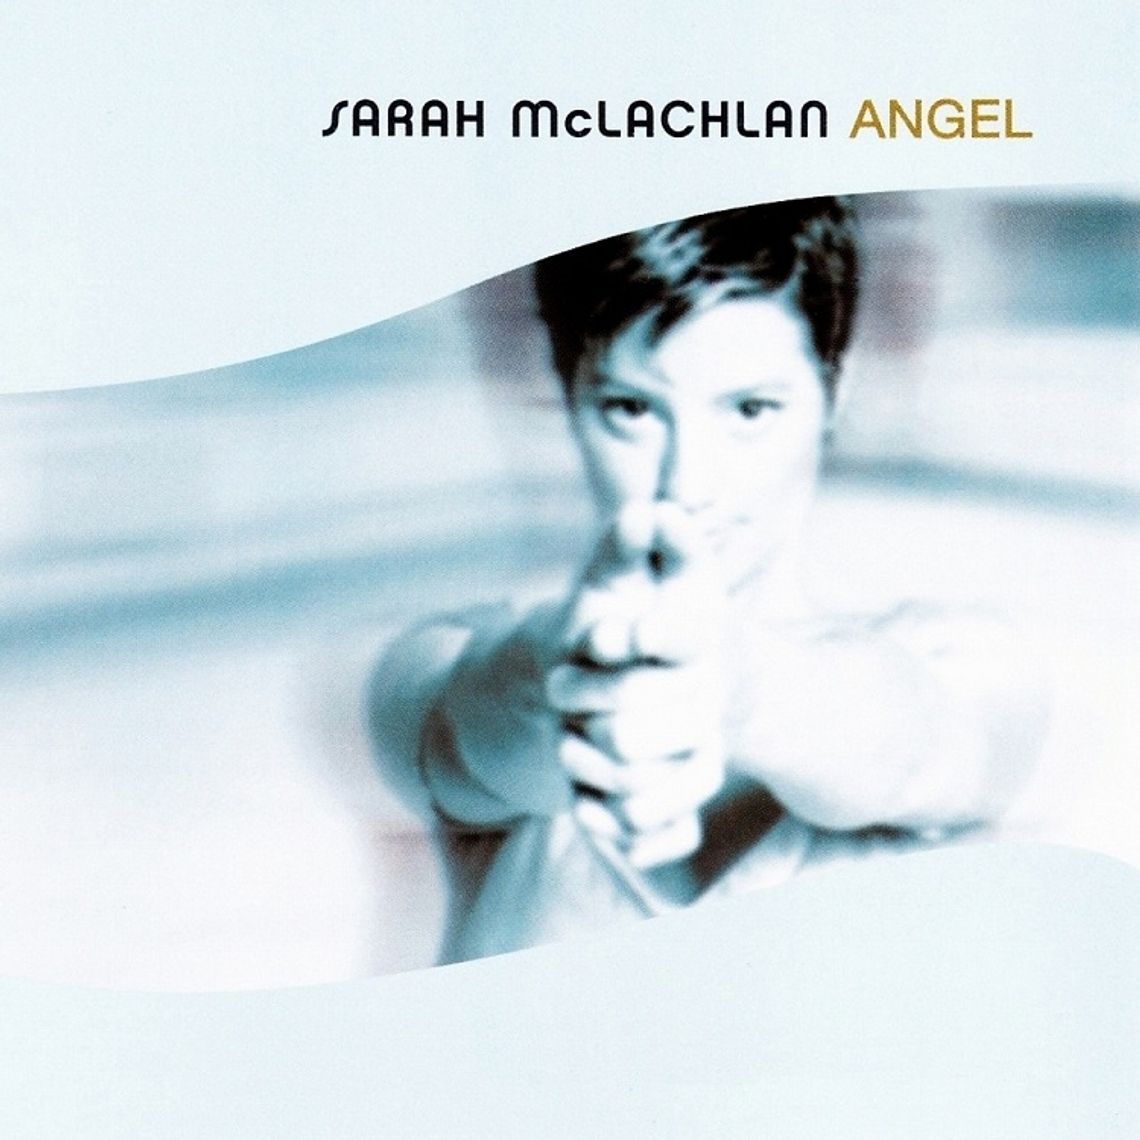 SARAH MCLACHLAN "Angel"